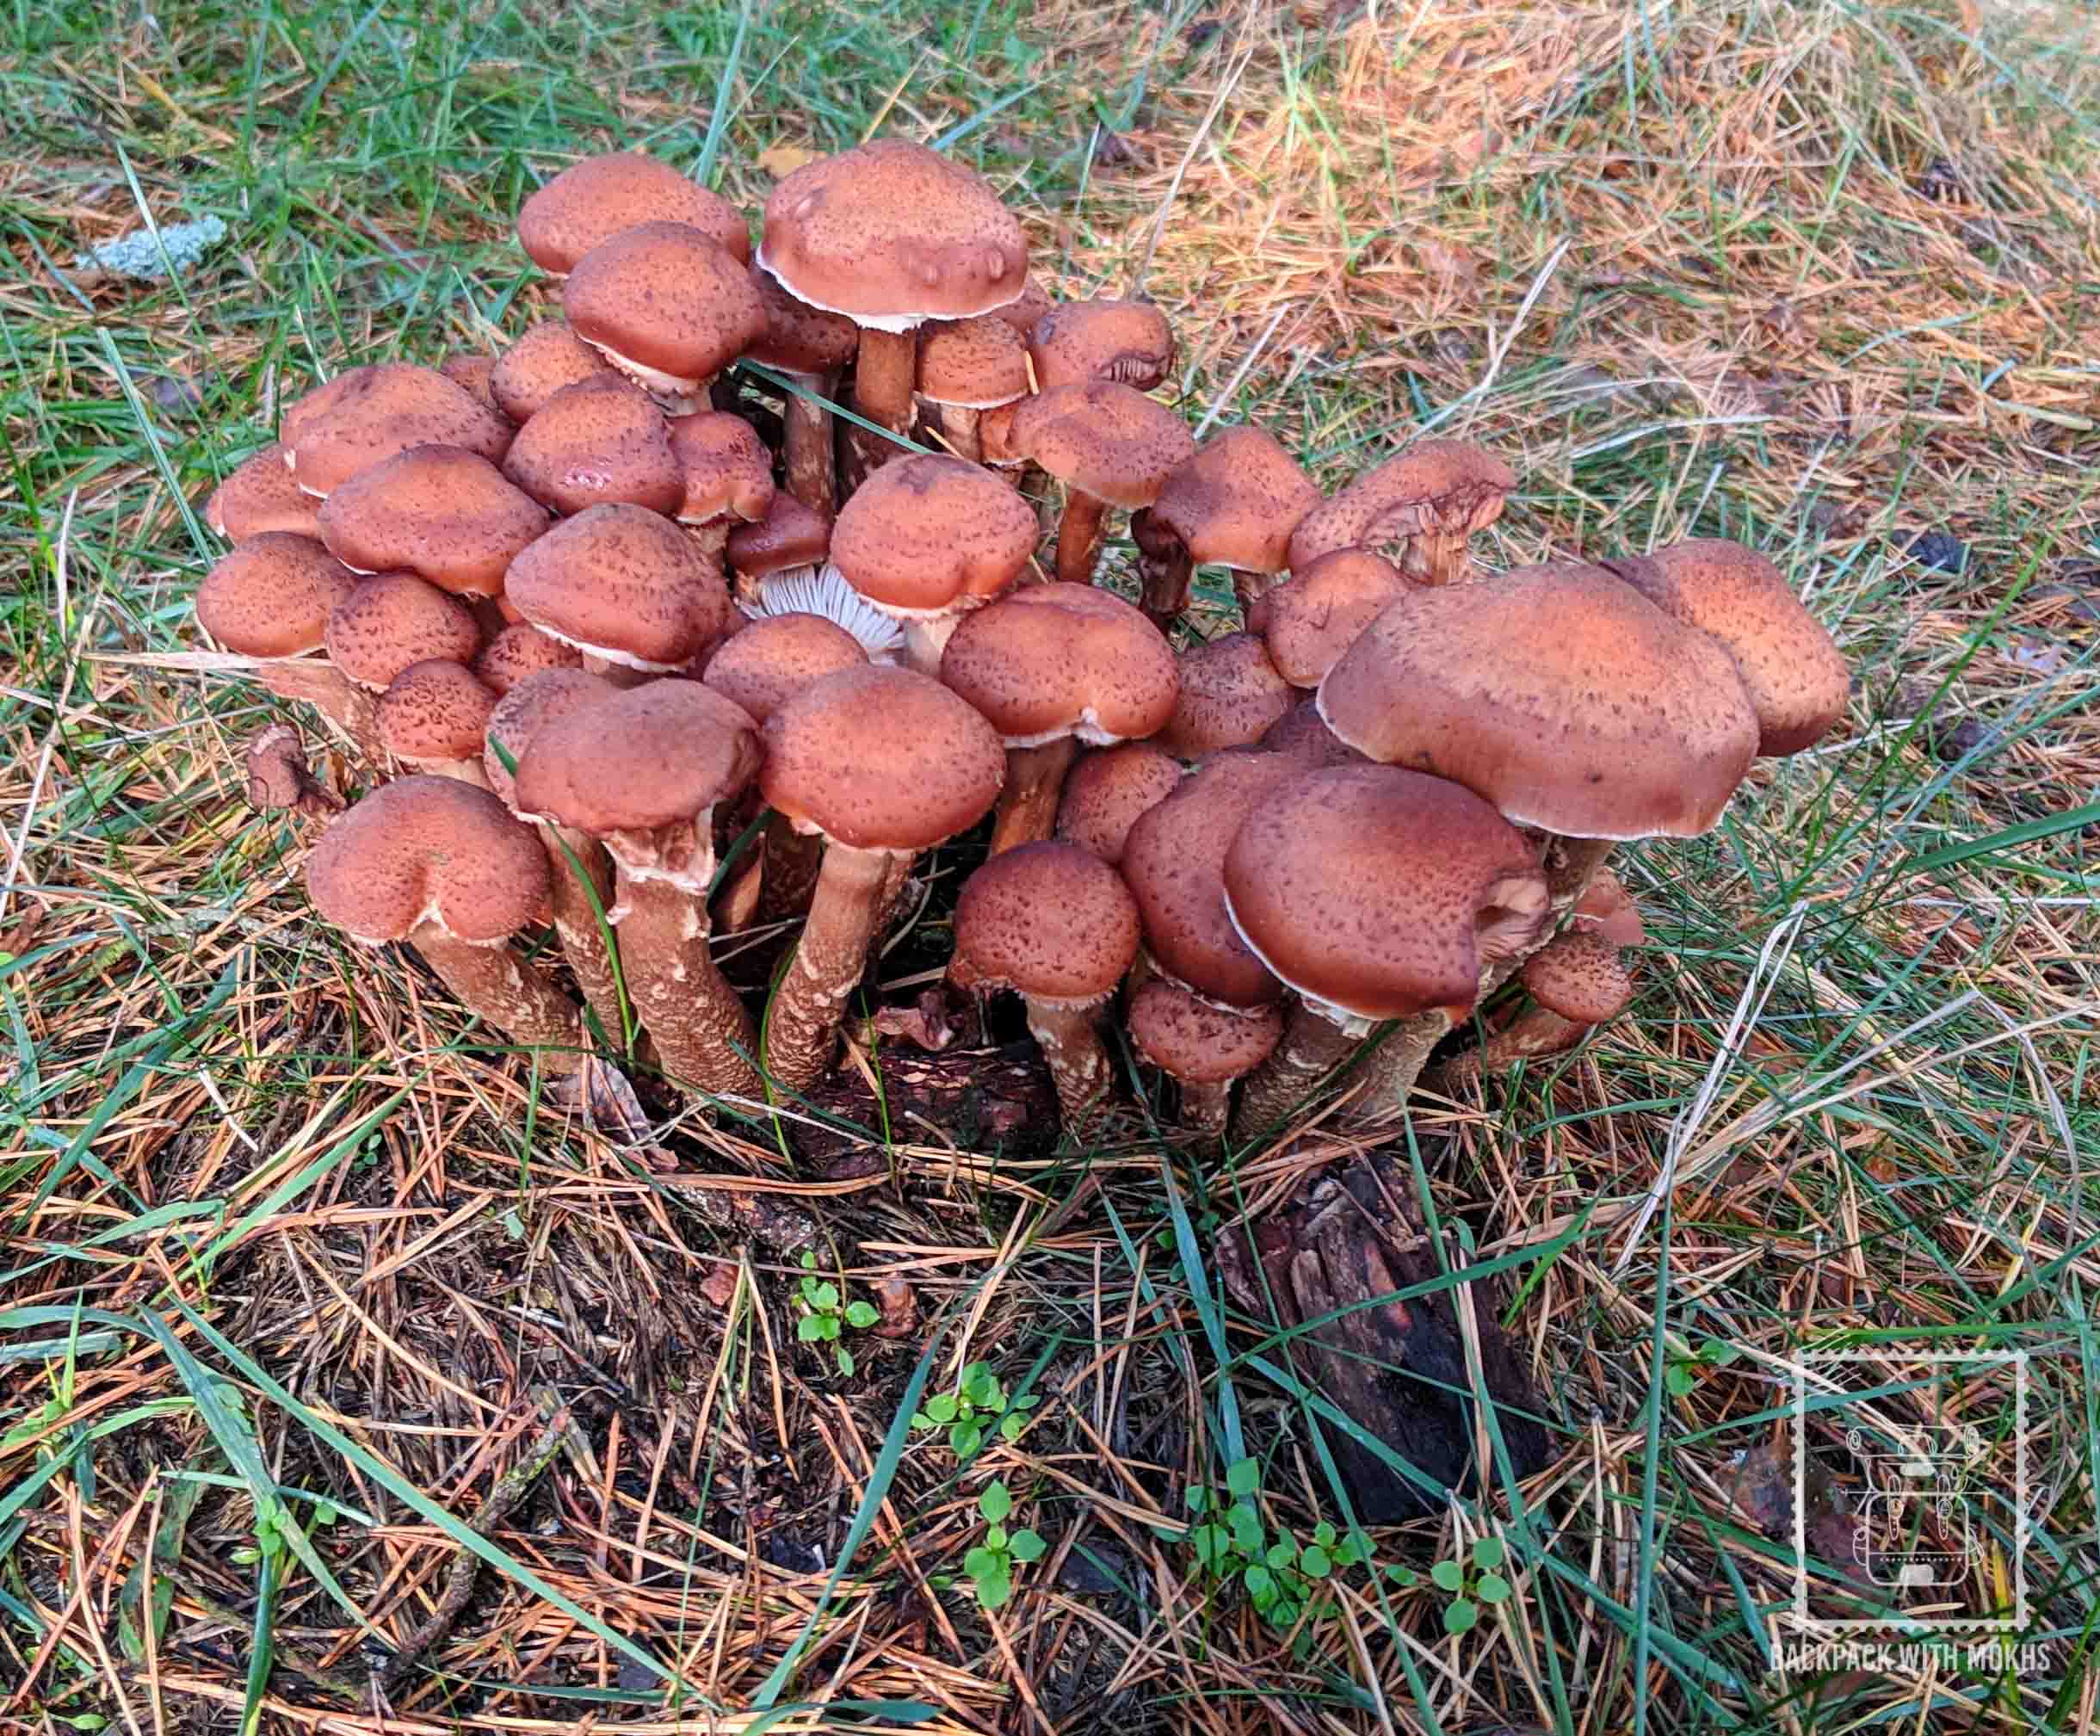 Mushroom picking in Lithuania